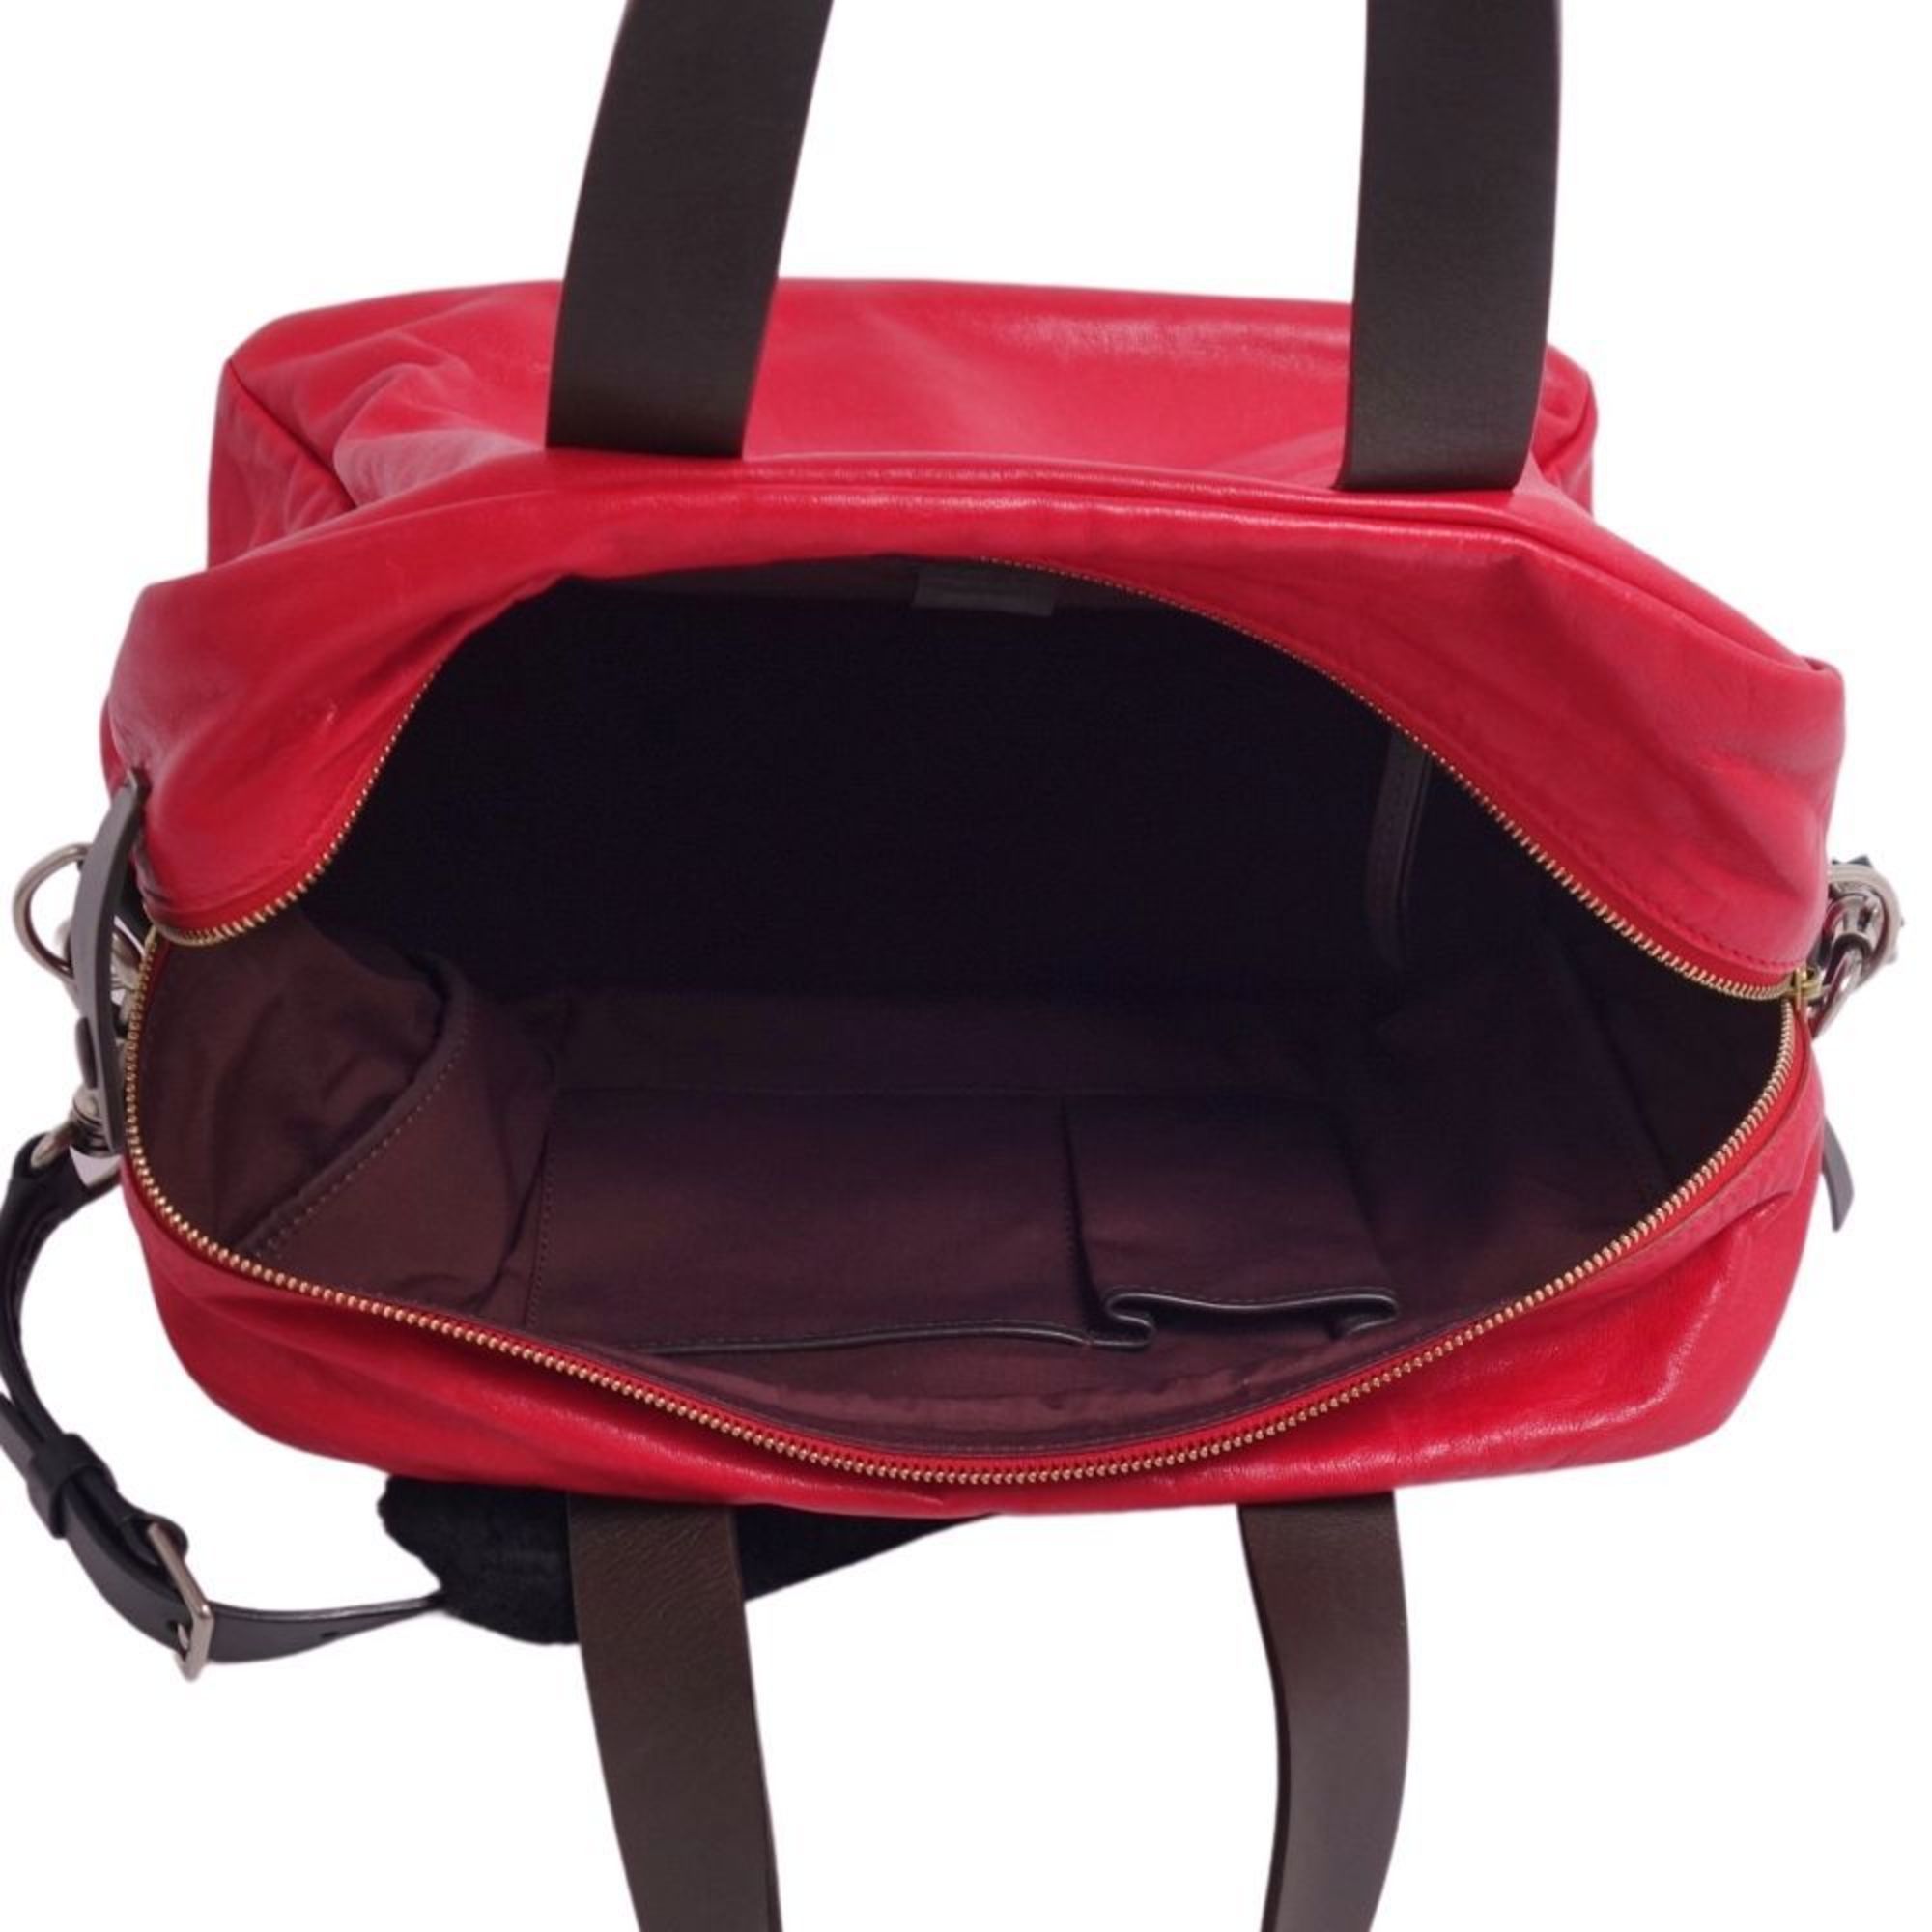 Celine CELINE bag Phoebe period 2way handbag shoulder ladies red